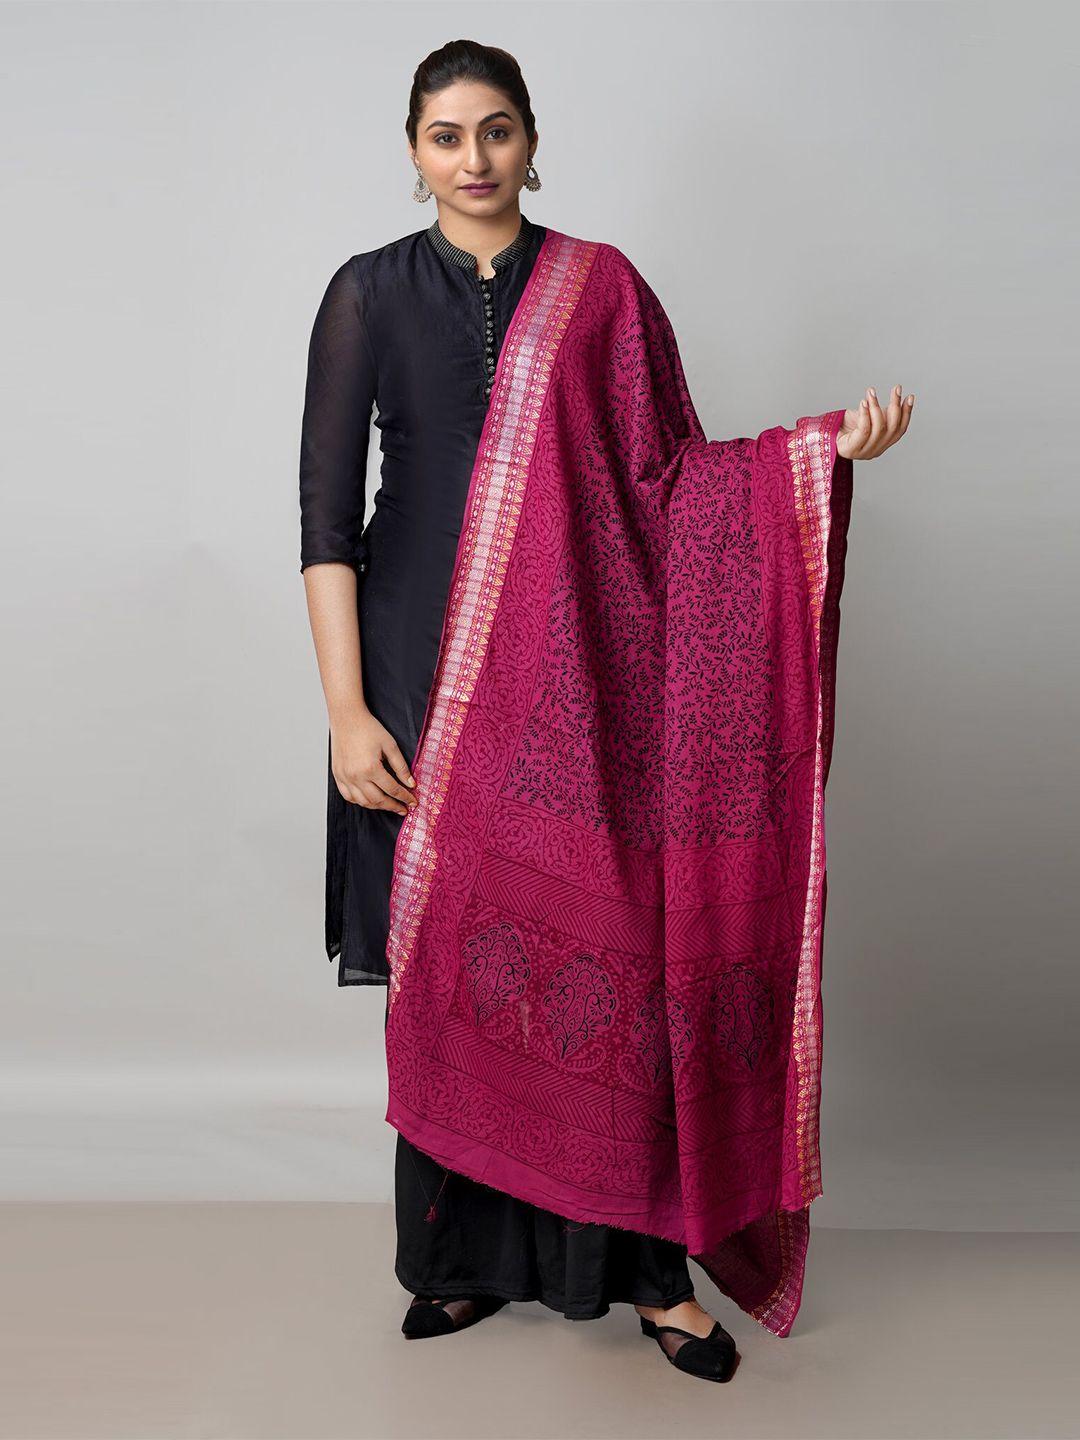 unnati-silks-pink-&-black-ethnic-motifs-printed-pure-cotton-dupatta-with-zari